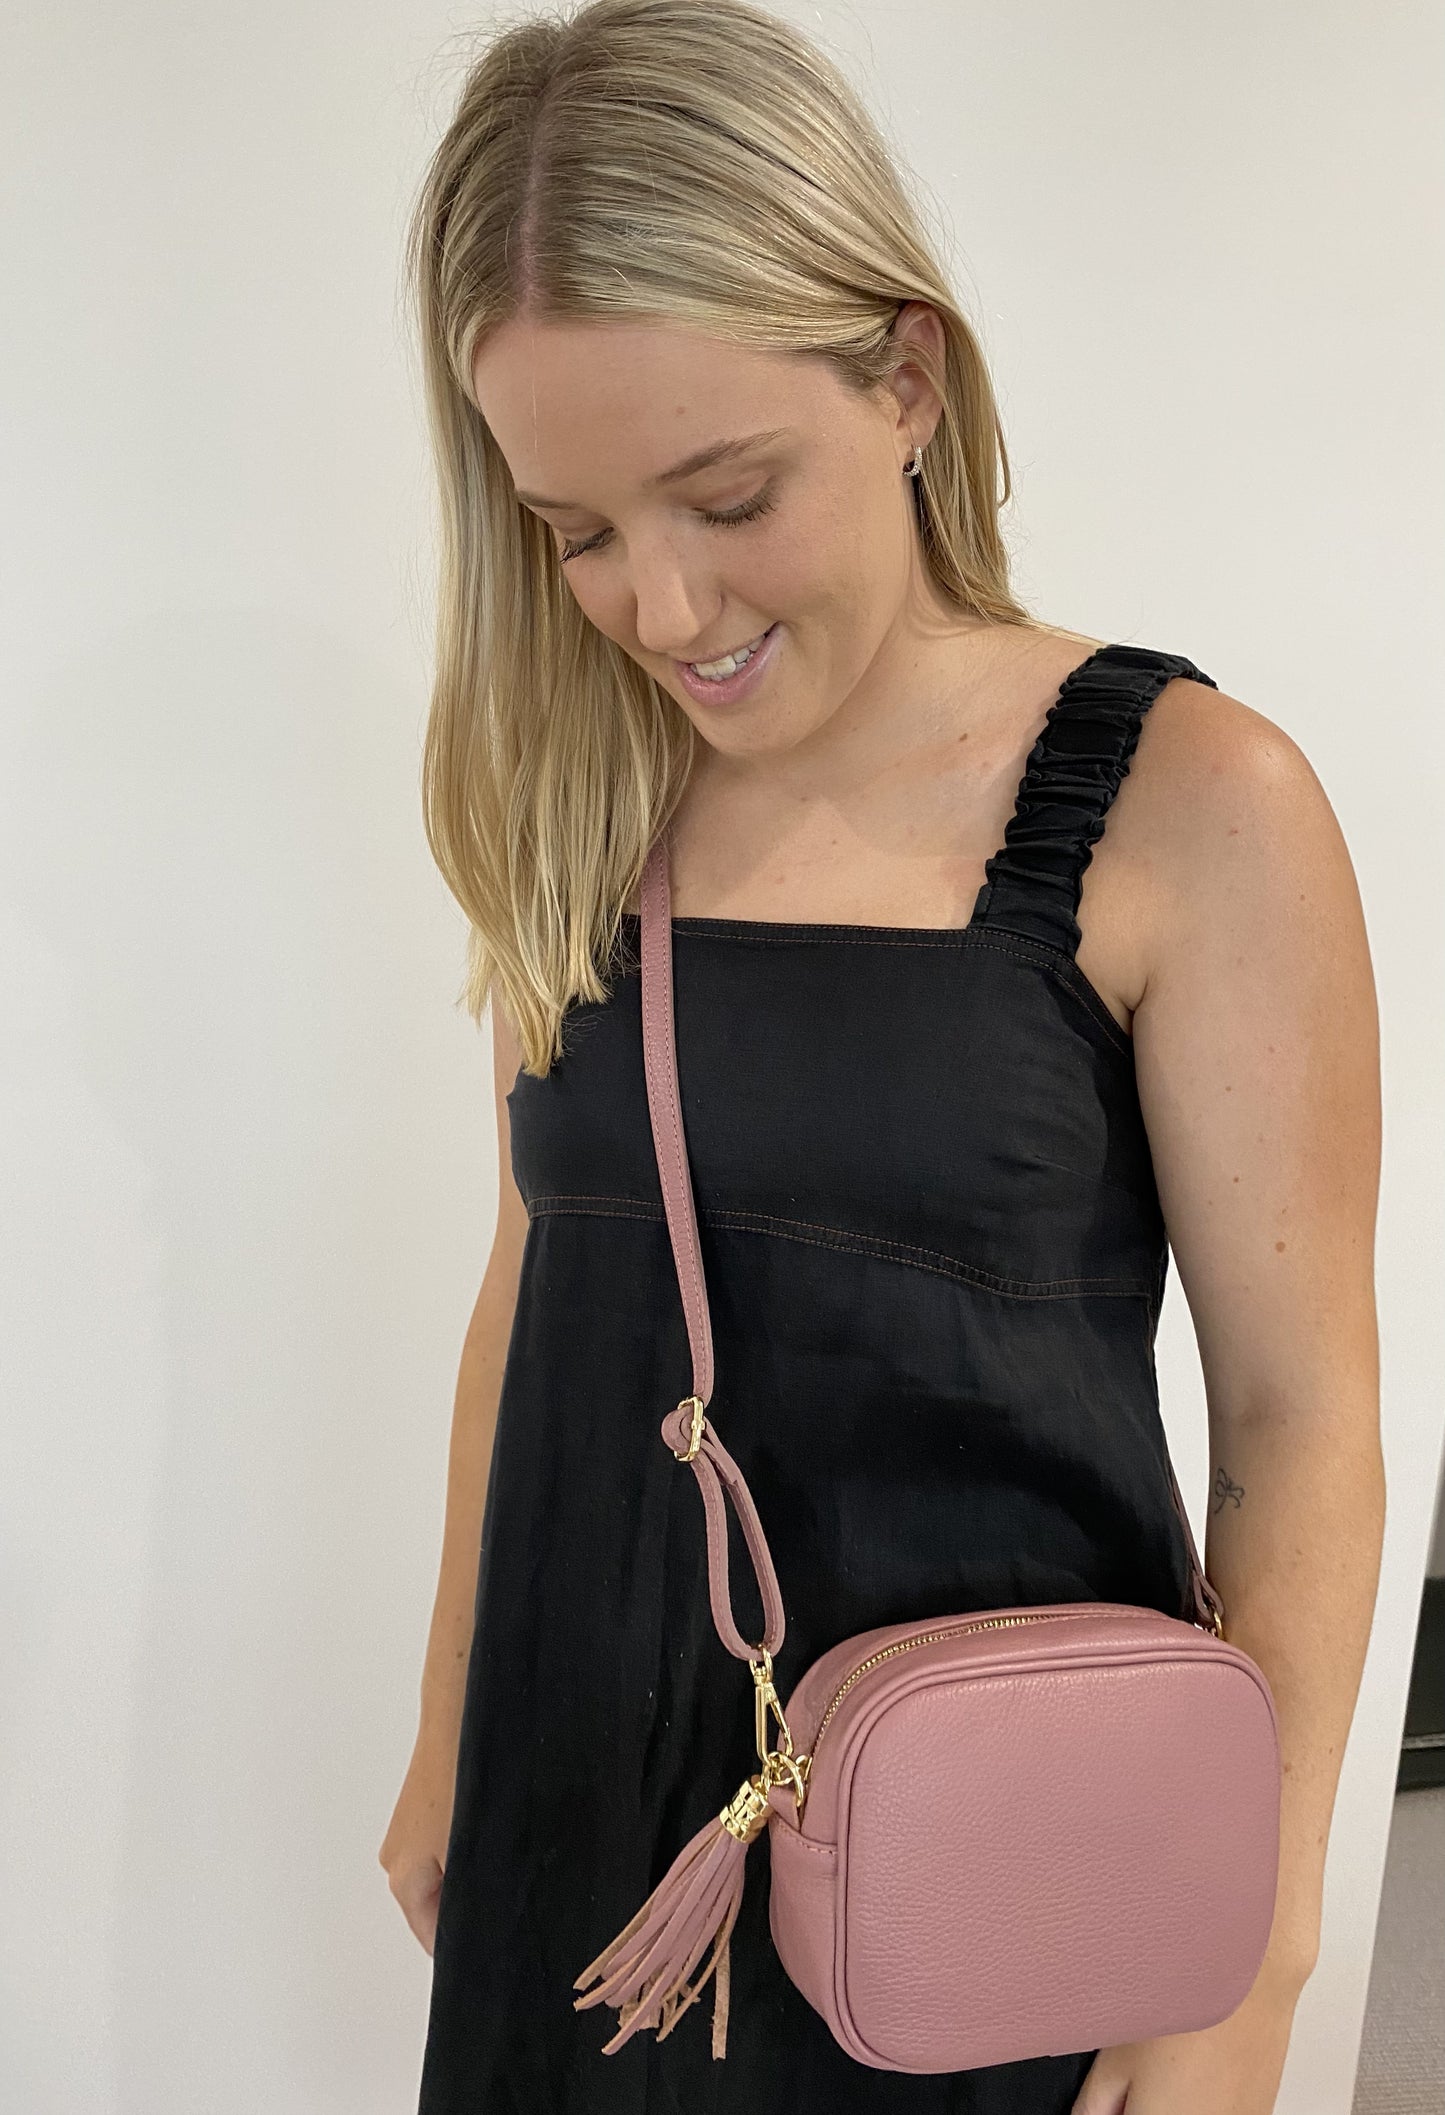 Tassel disco leather handbag in Dusty Pink